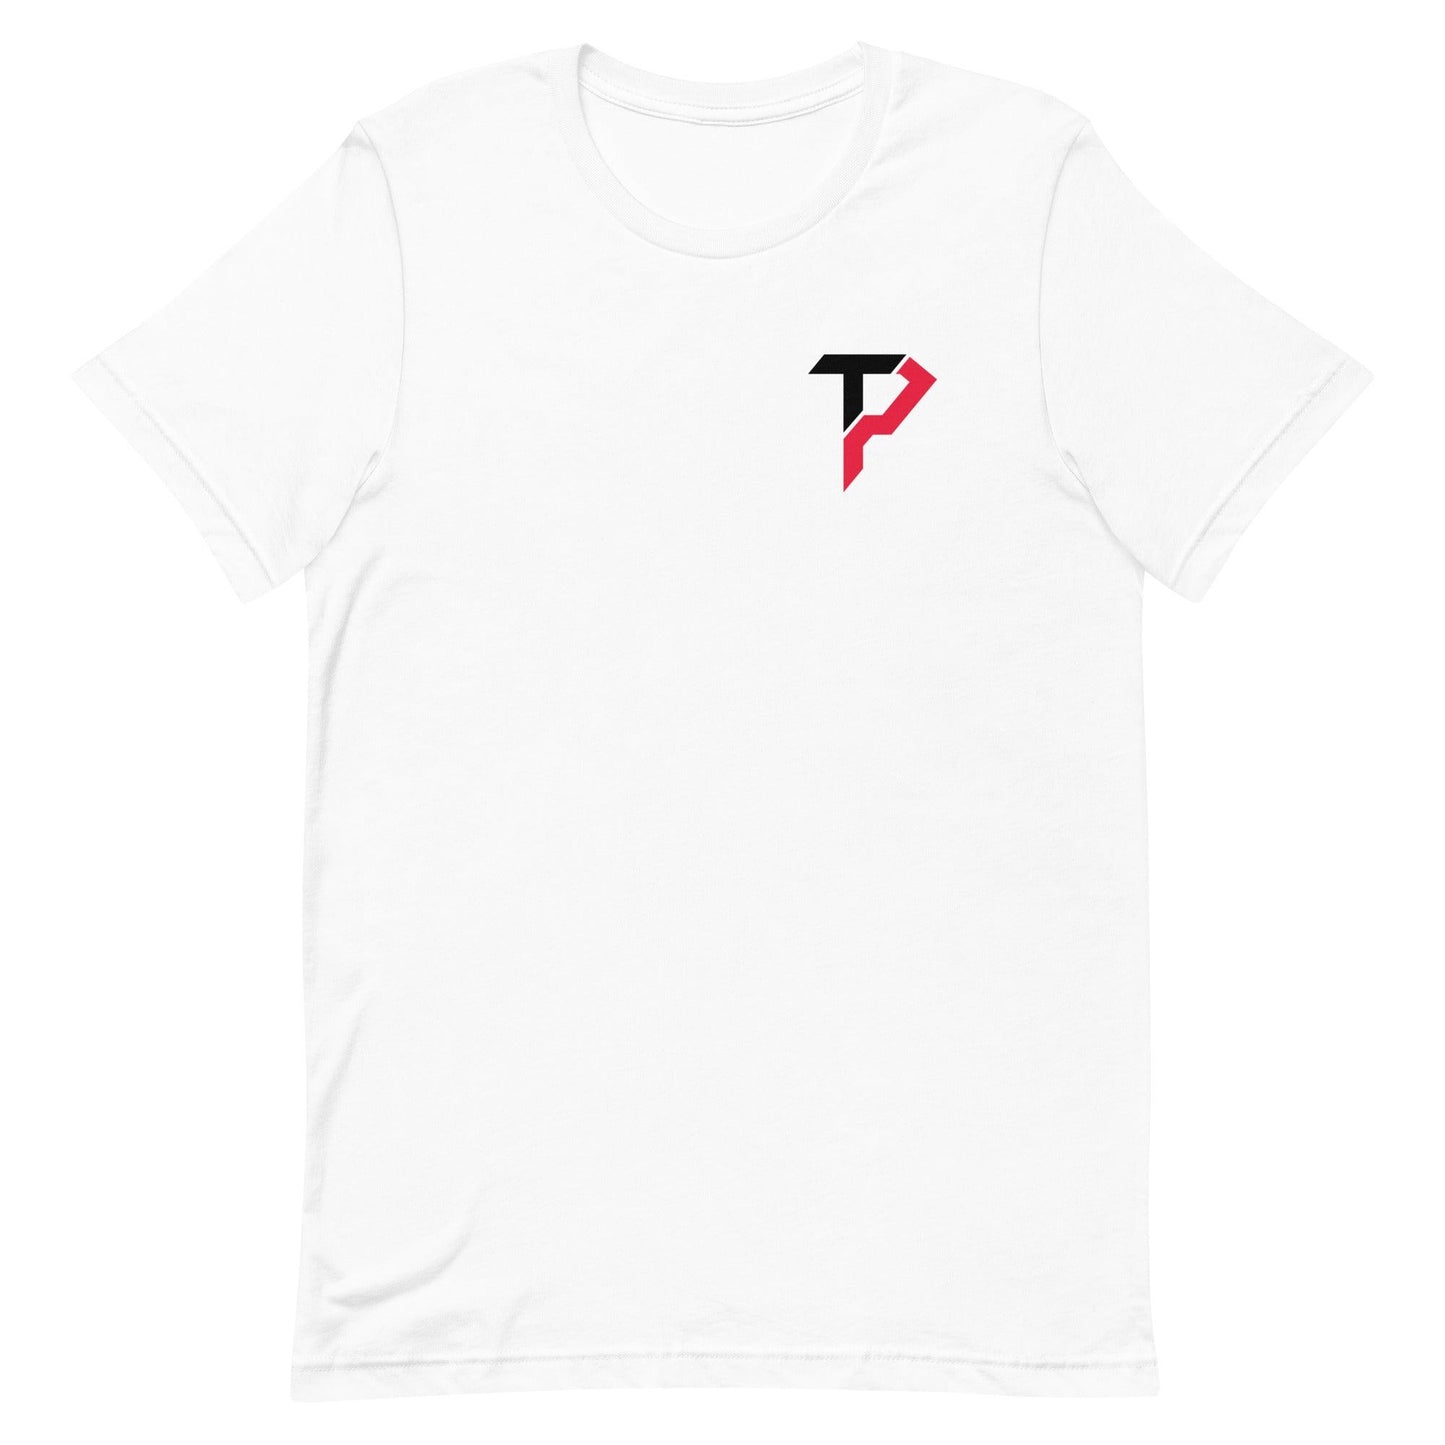 Ty Perkins "Essential" t-shirt - Fan Arch